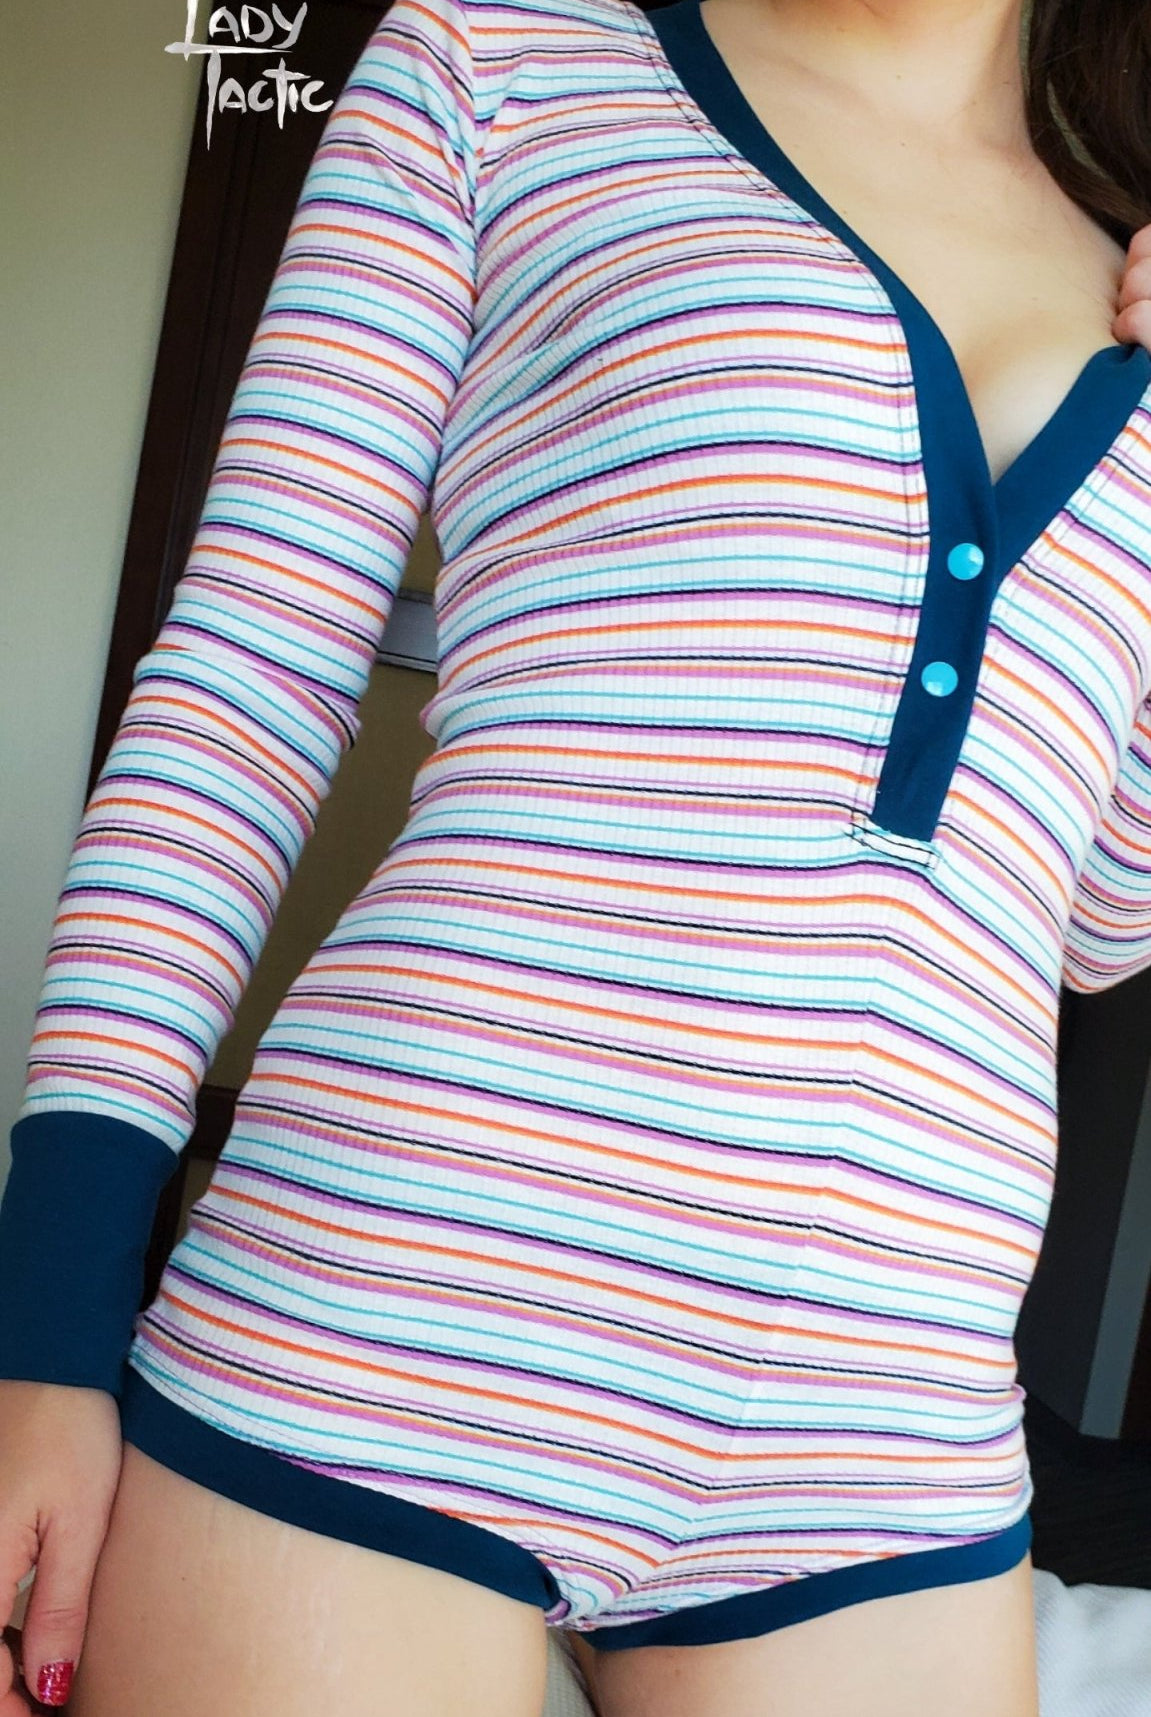 Keira Stripes. Purple, Teal, Navy & Coral Stripes on White Rib Knit. RIB-120 - Boho Fabrics